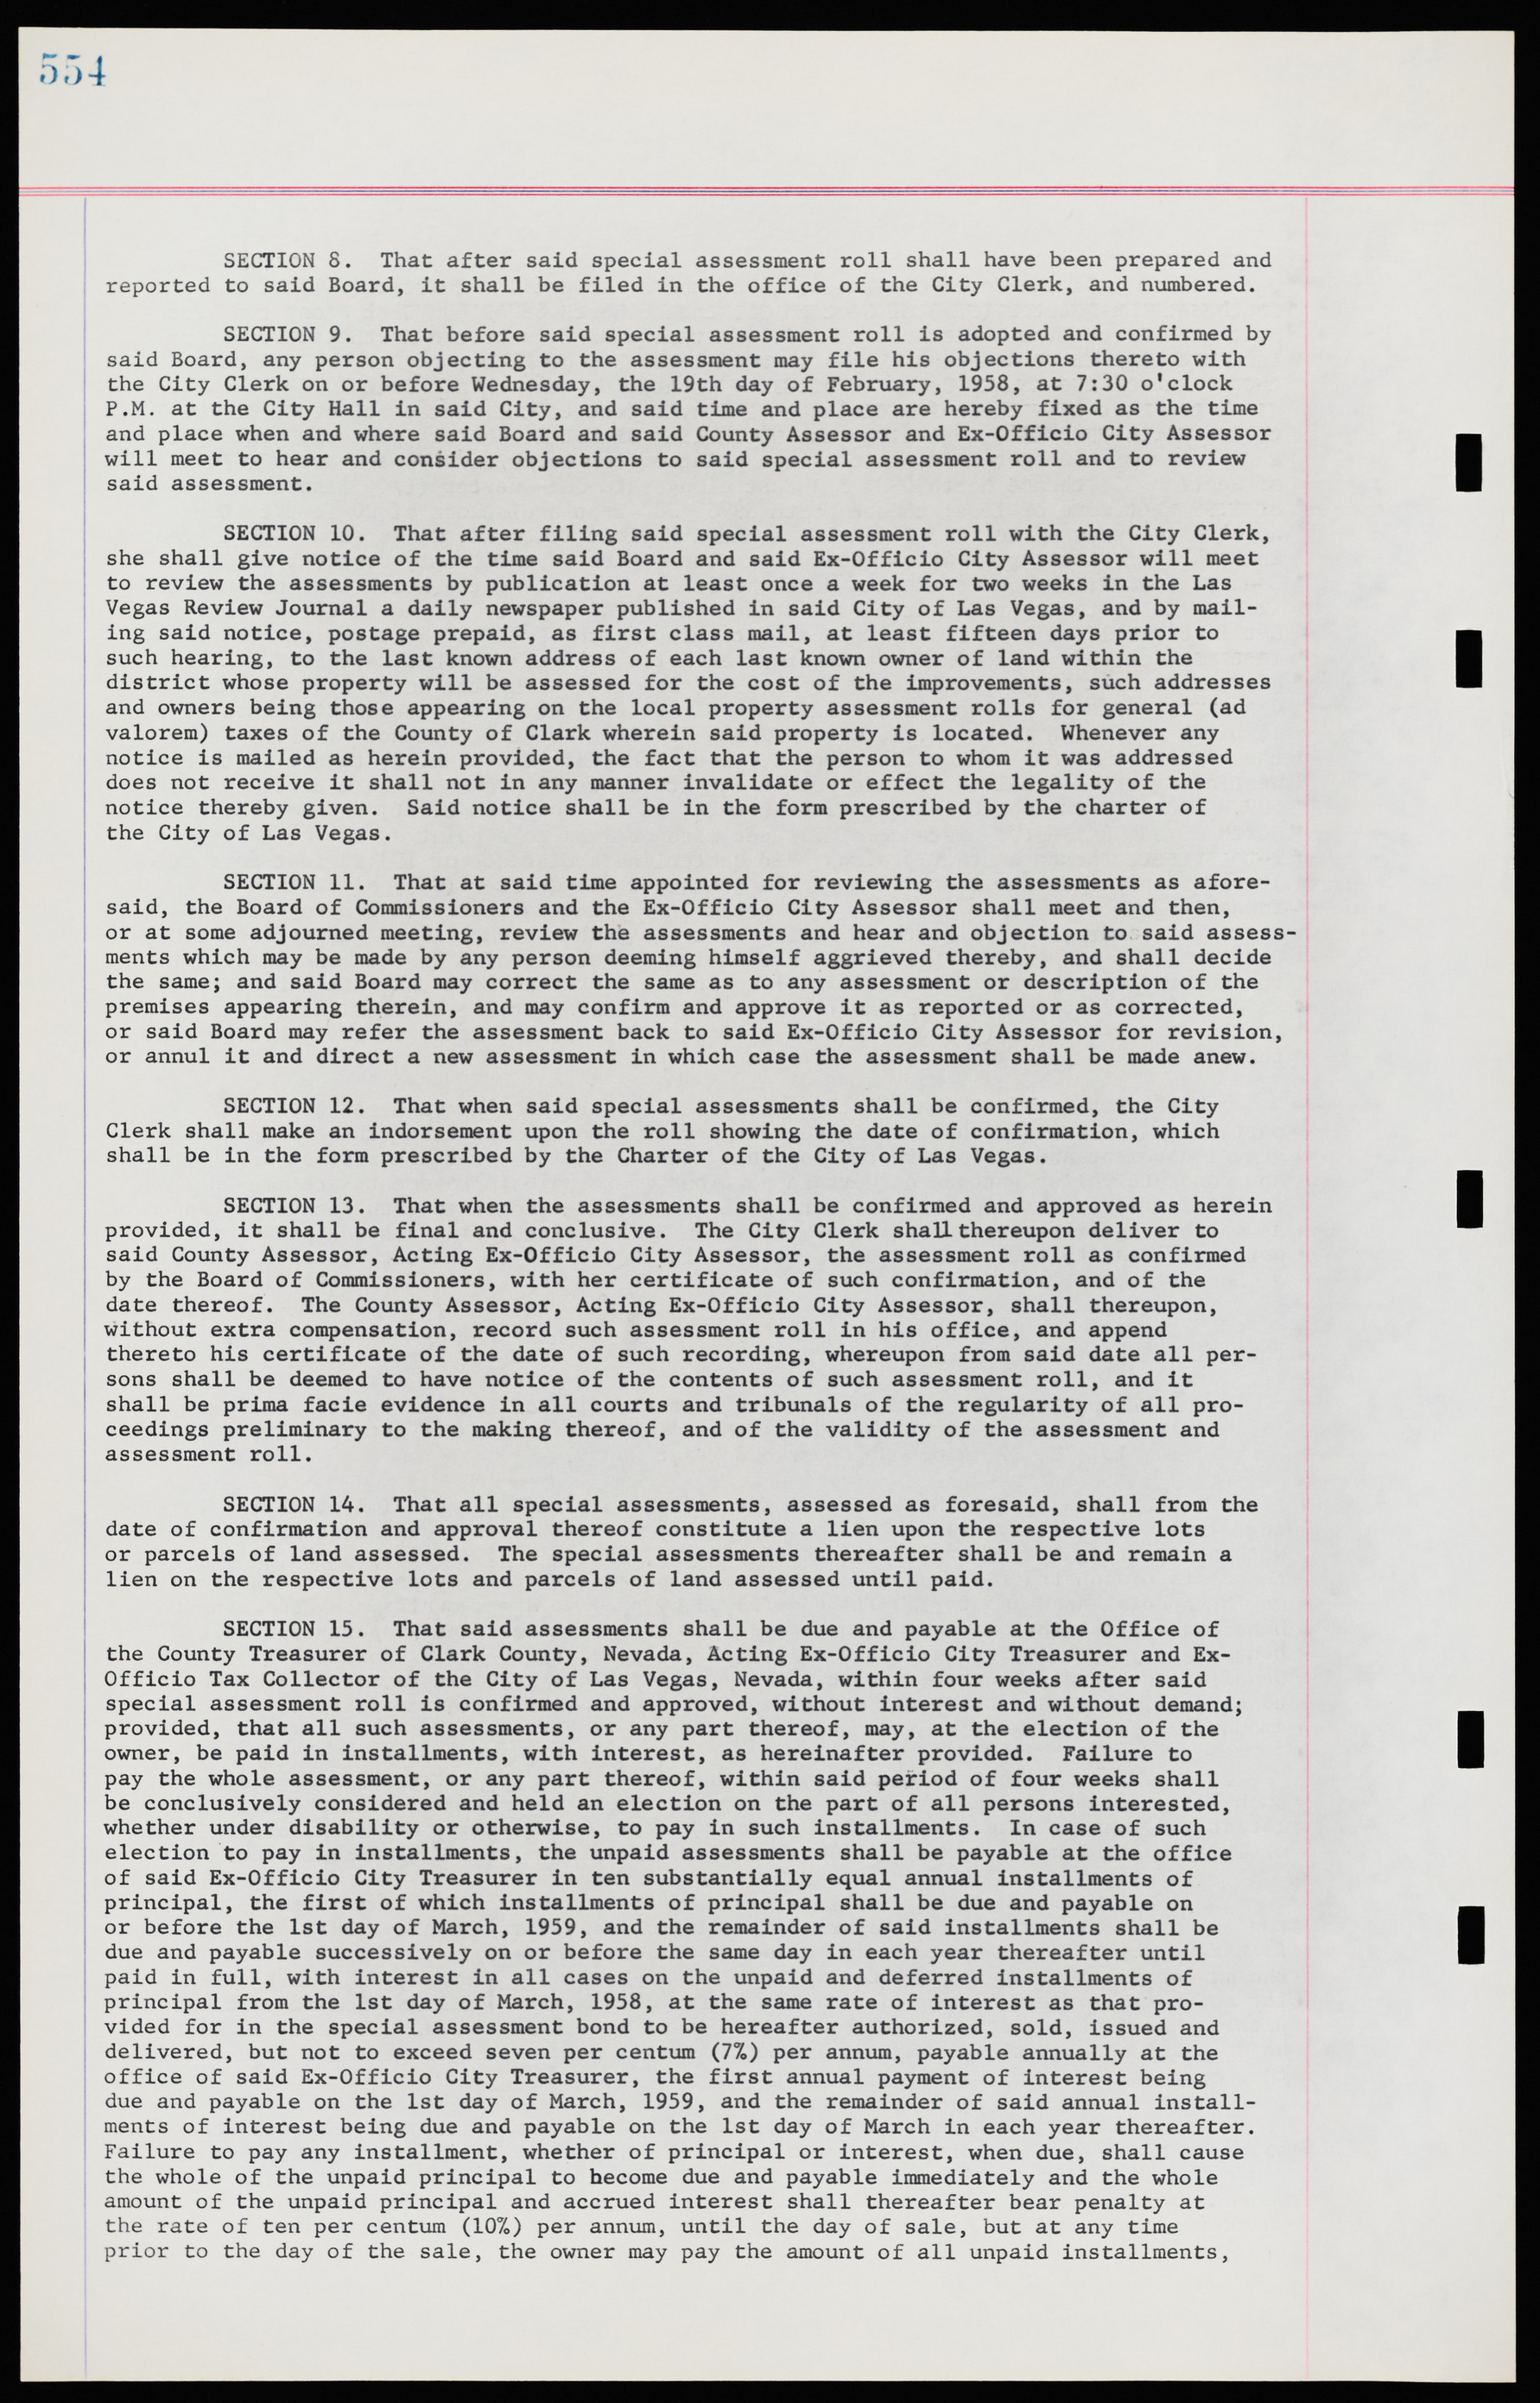 Las Vegas City Ordinances, November 13, 1950 to August 6, 1958, lvc000015-562